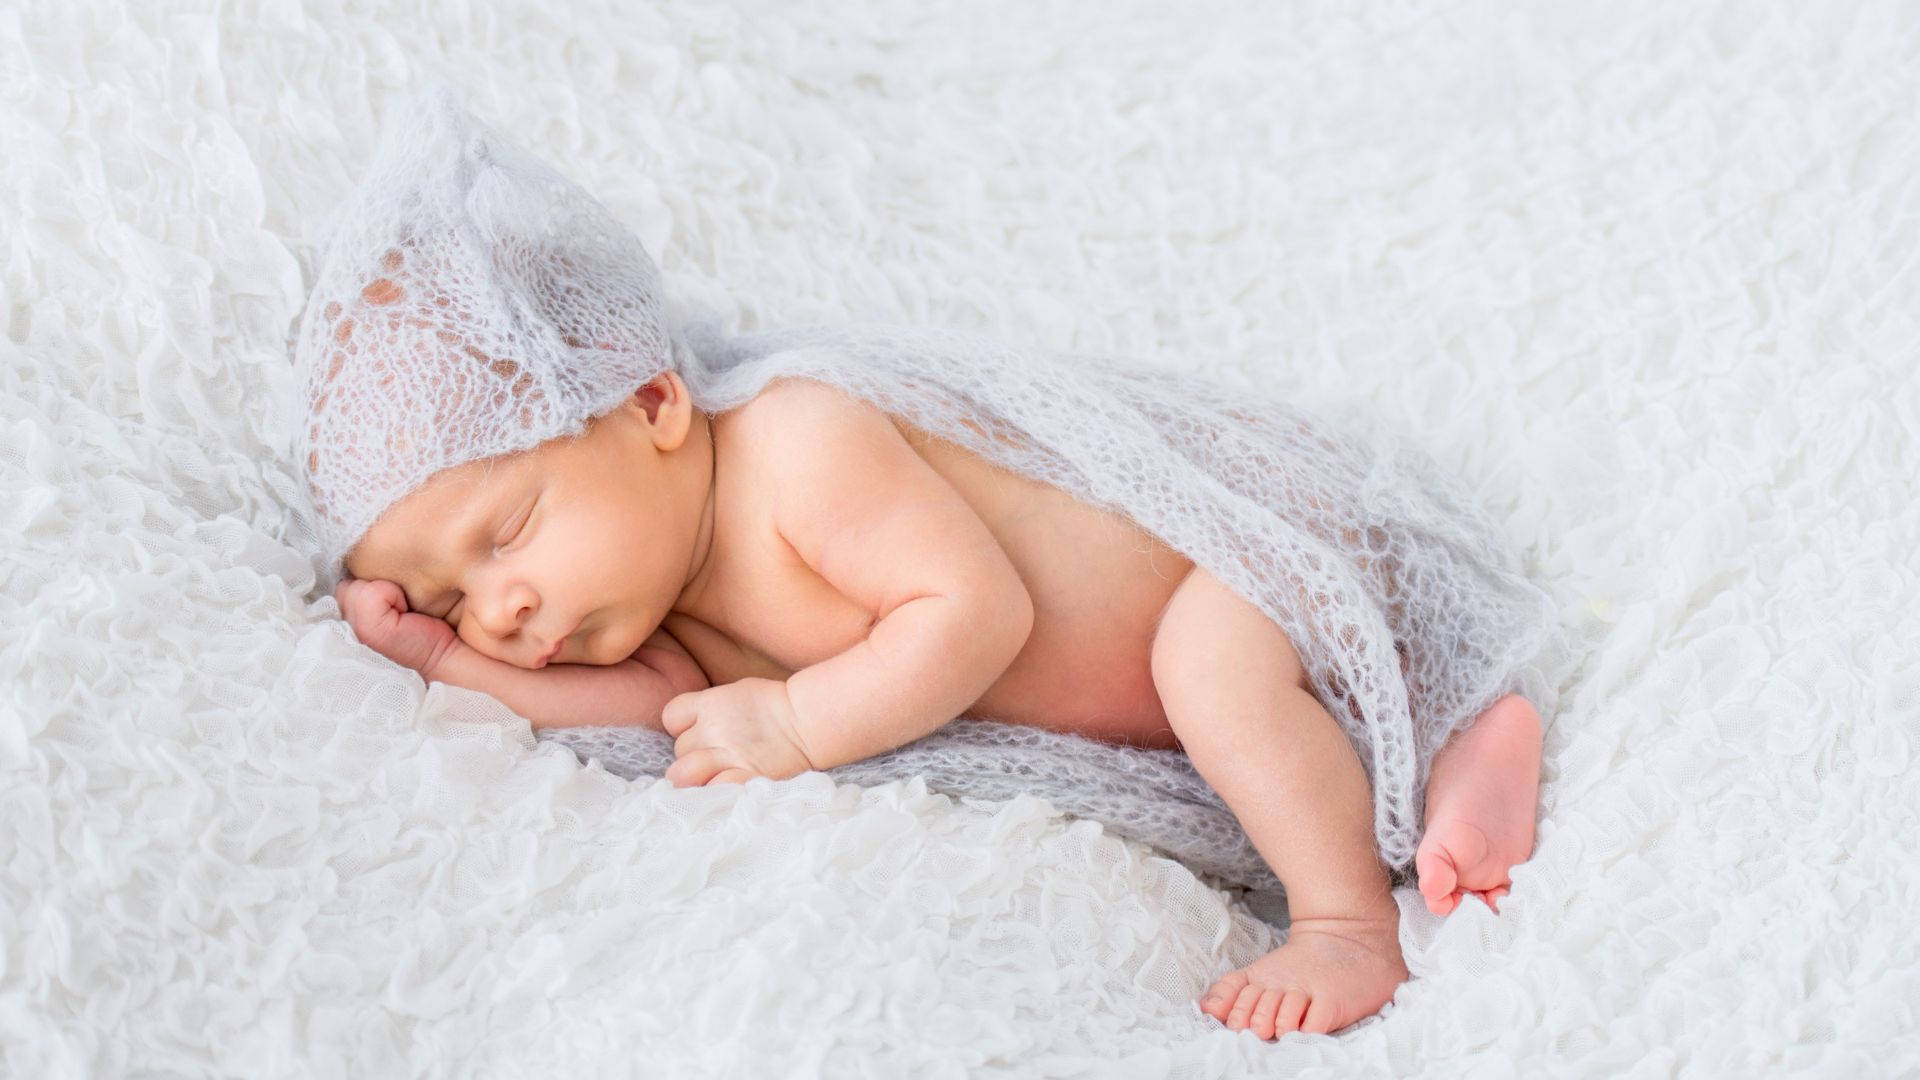 Babyphotography Inslagen I Grått Tyg Wallpaper